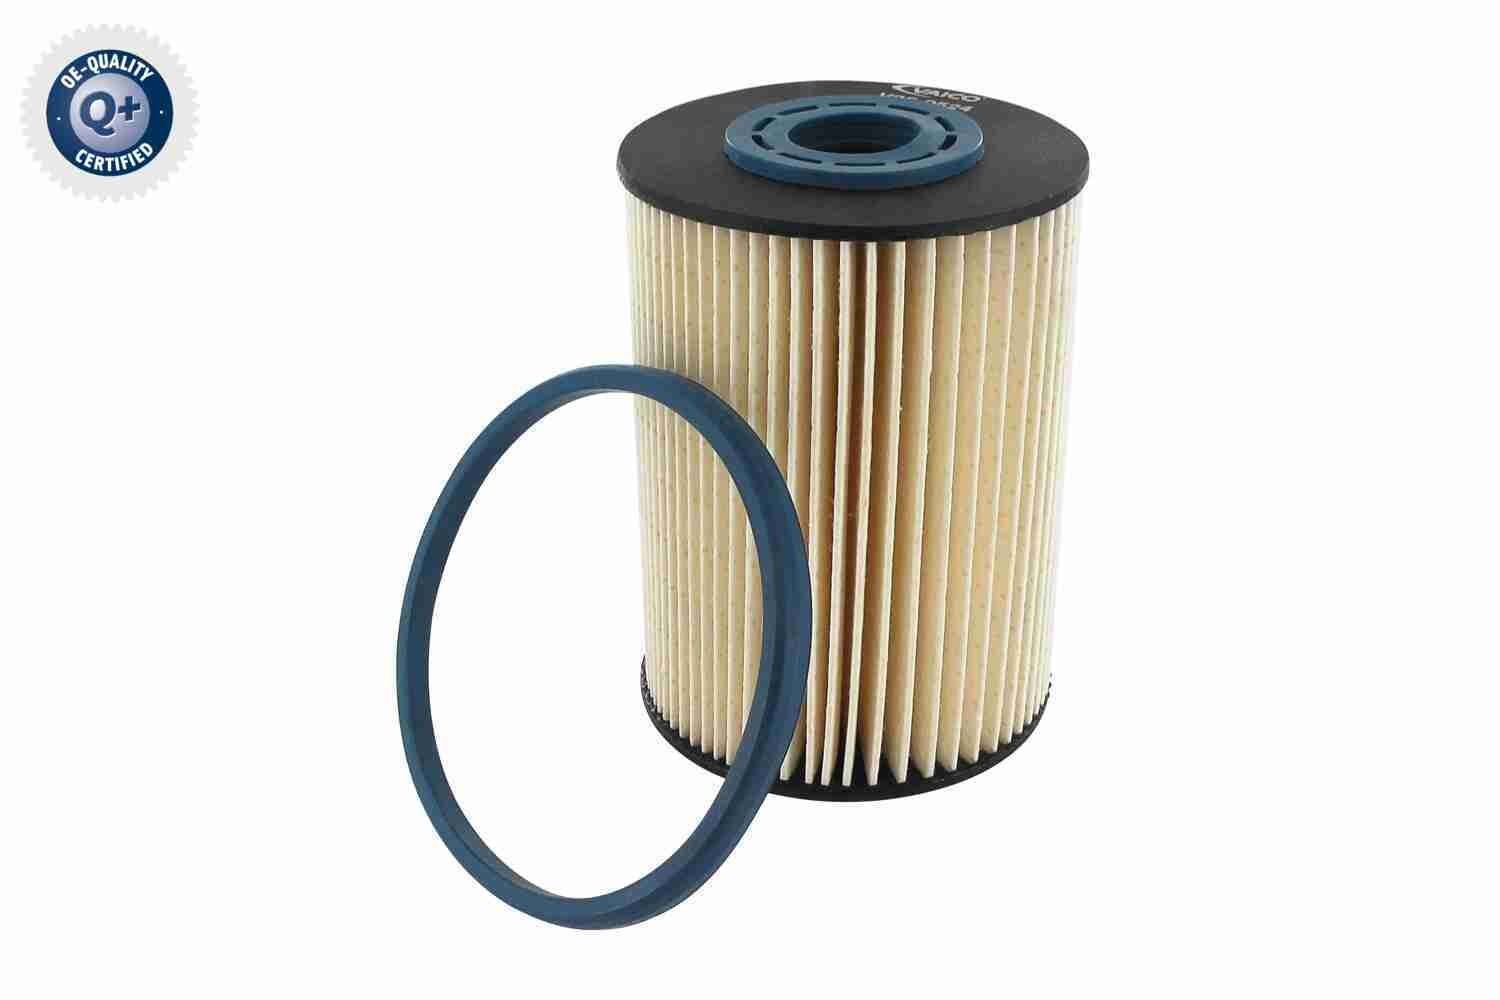 V25-0524 VAICO Fuel filters VOLVO Filter Insert, Q+, original equipment manufacturer quality